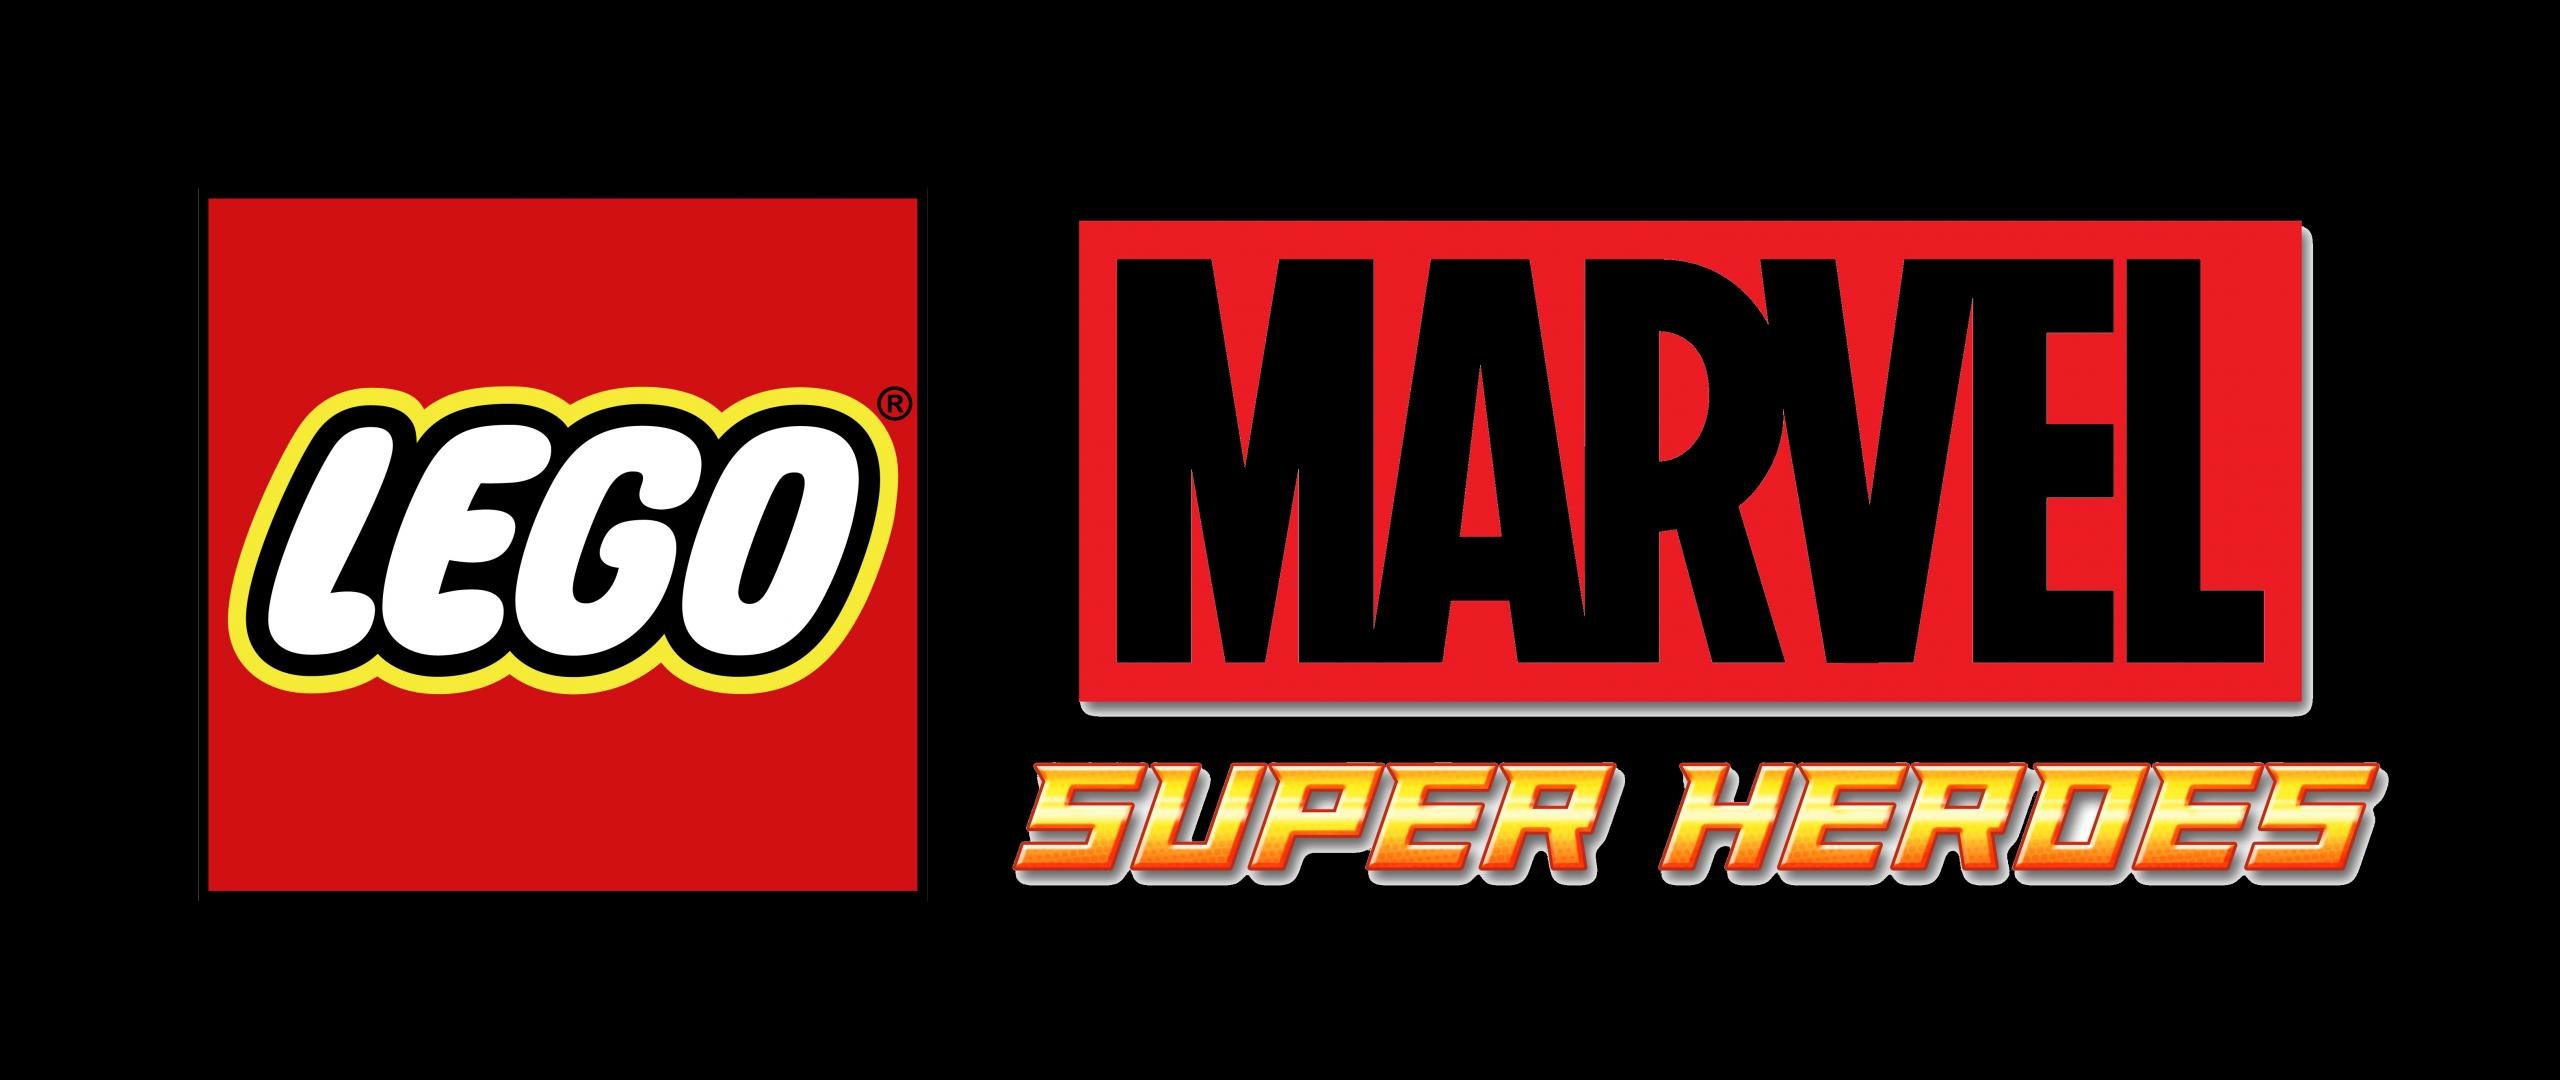 Download hd 2560x1080 LEGO Marvel Super Heroes desktop background ID:113183 for free